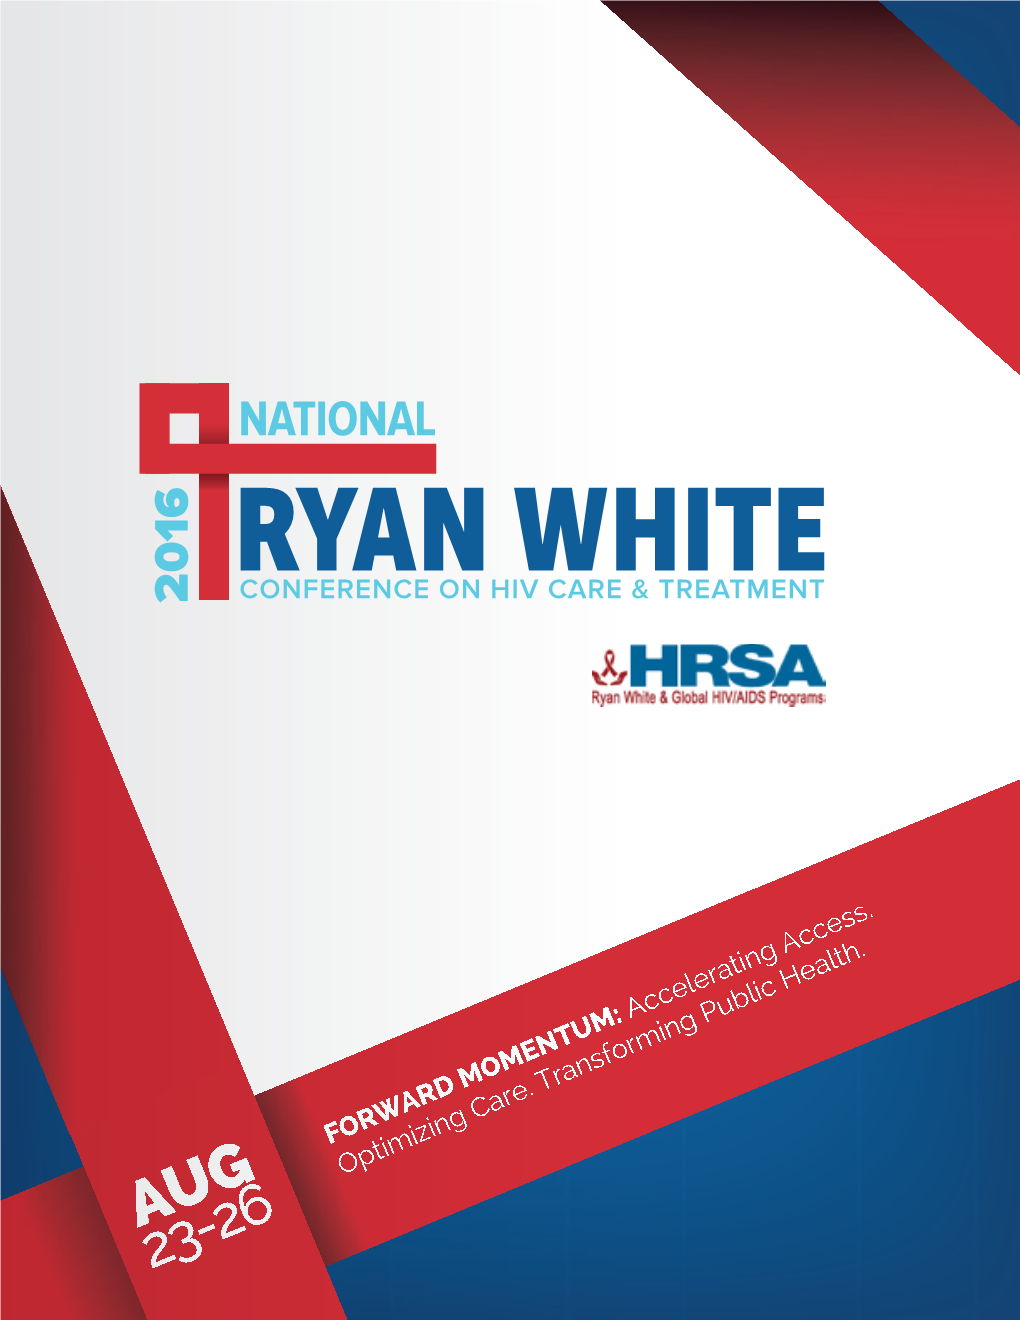 Ryan White 2016 Conference Program Book